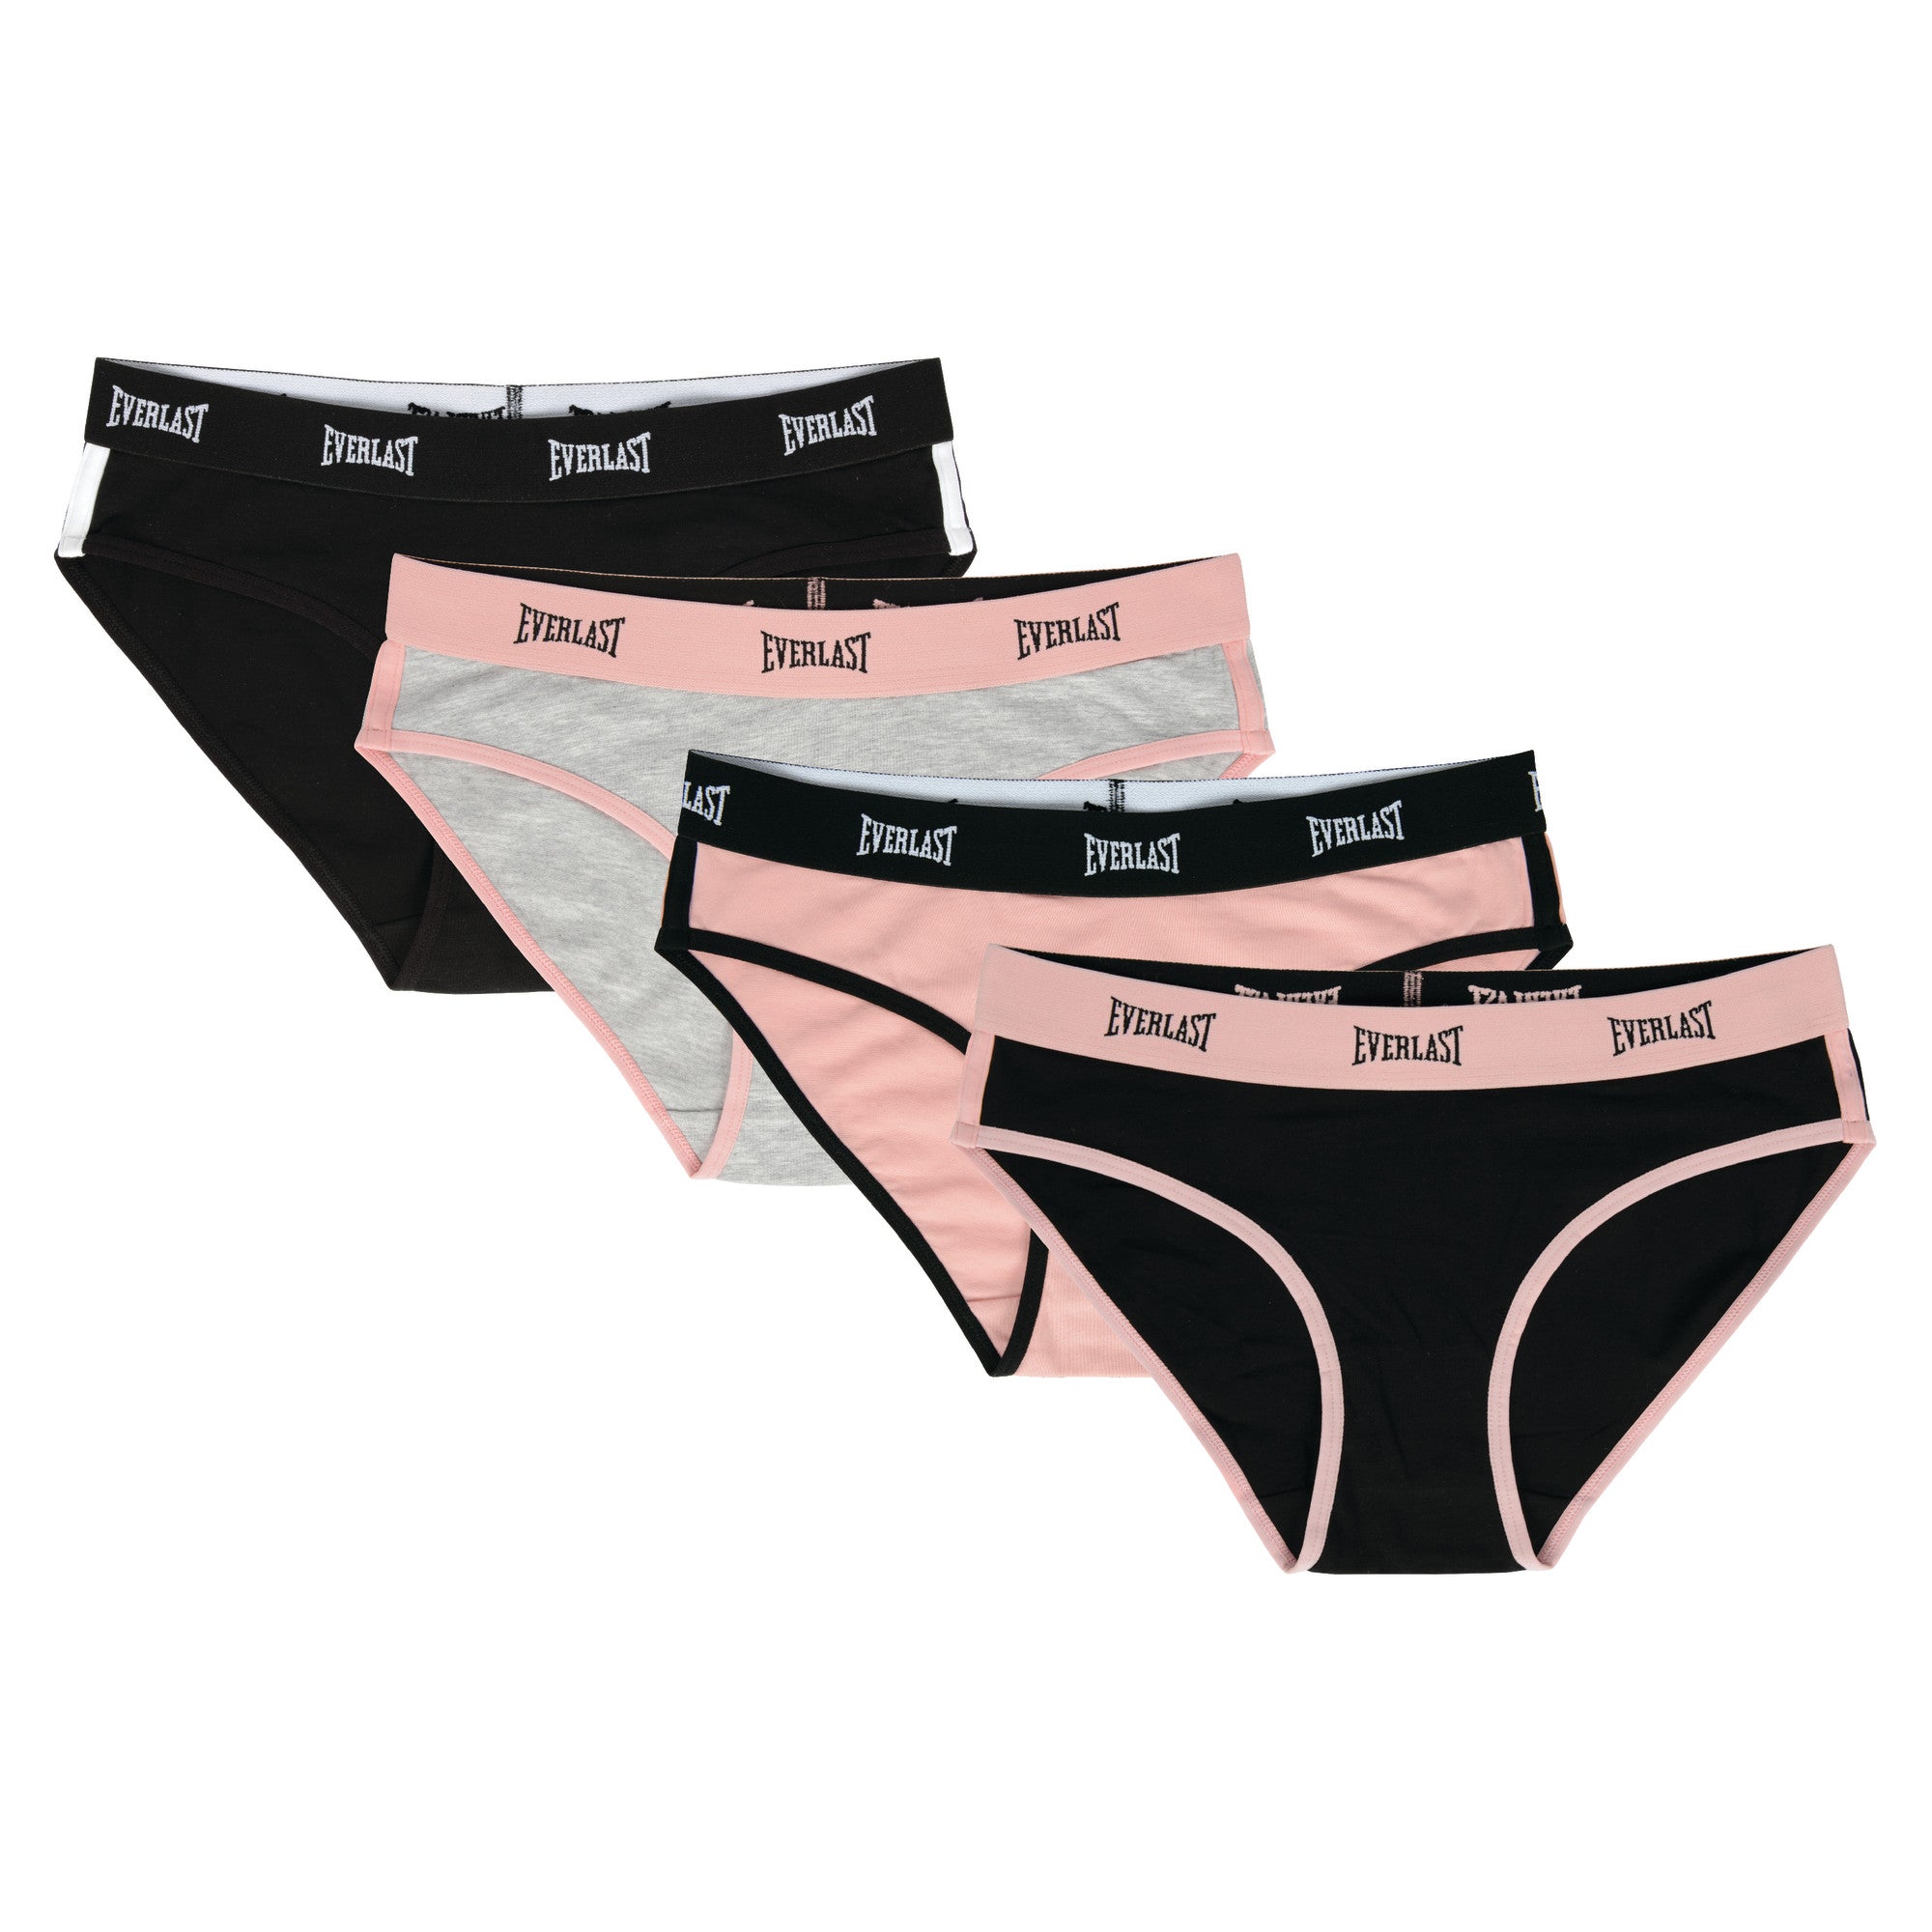 Cheeky bikini briefs women's underwear, black, Tencel MicroModal